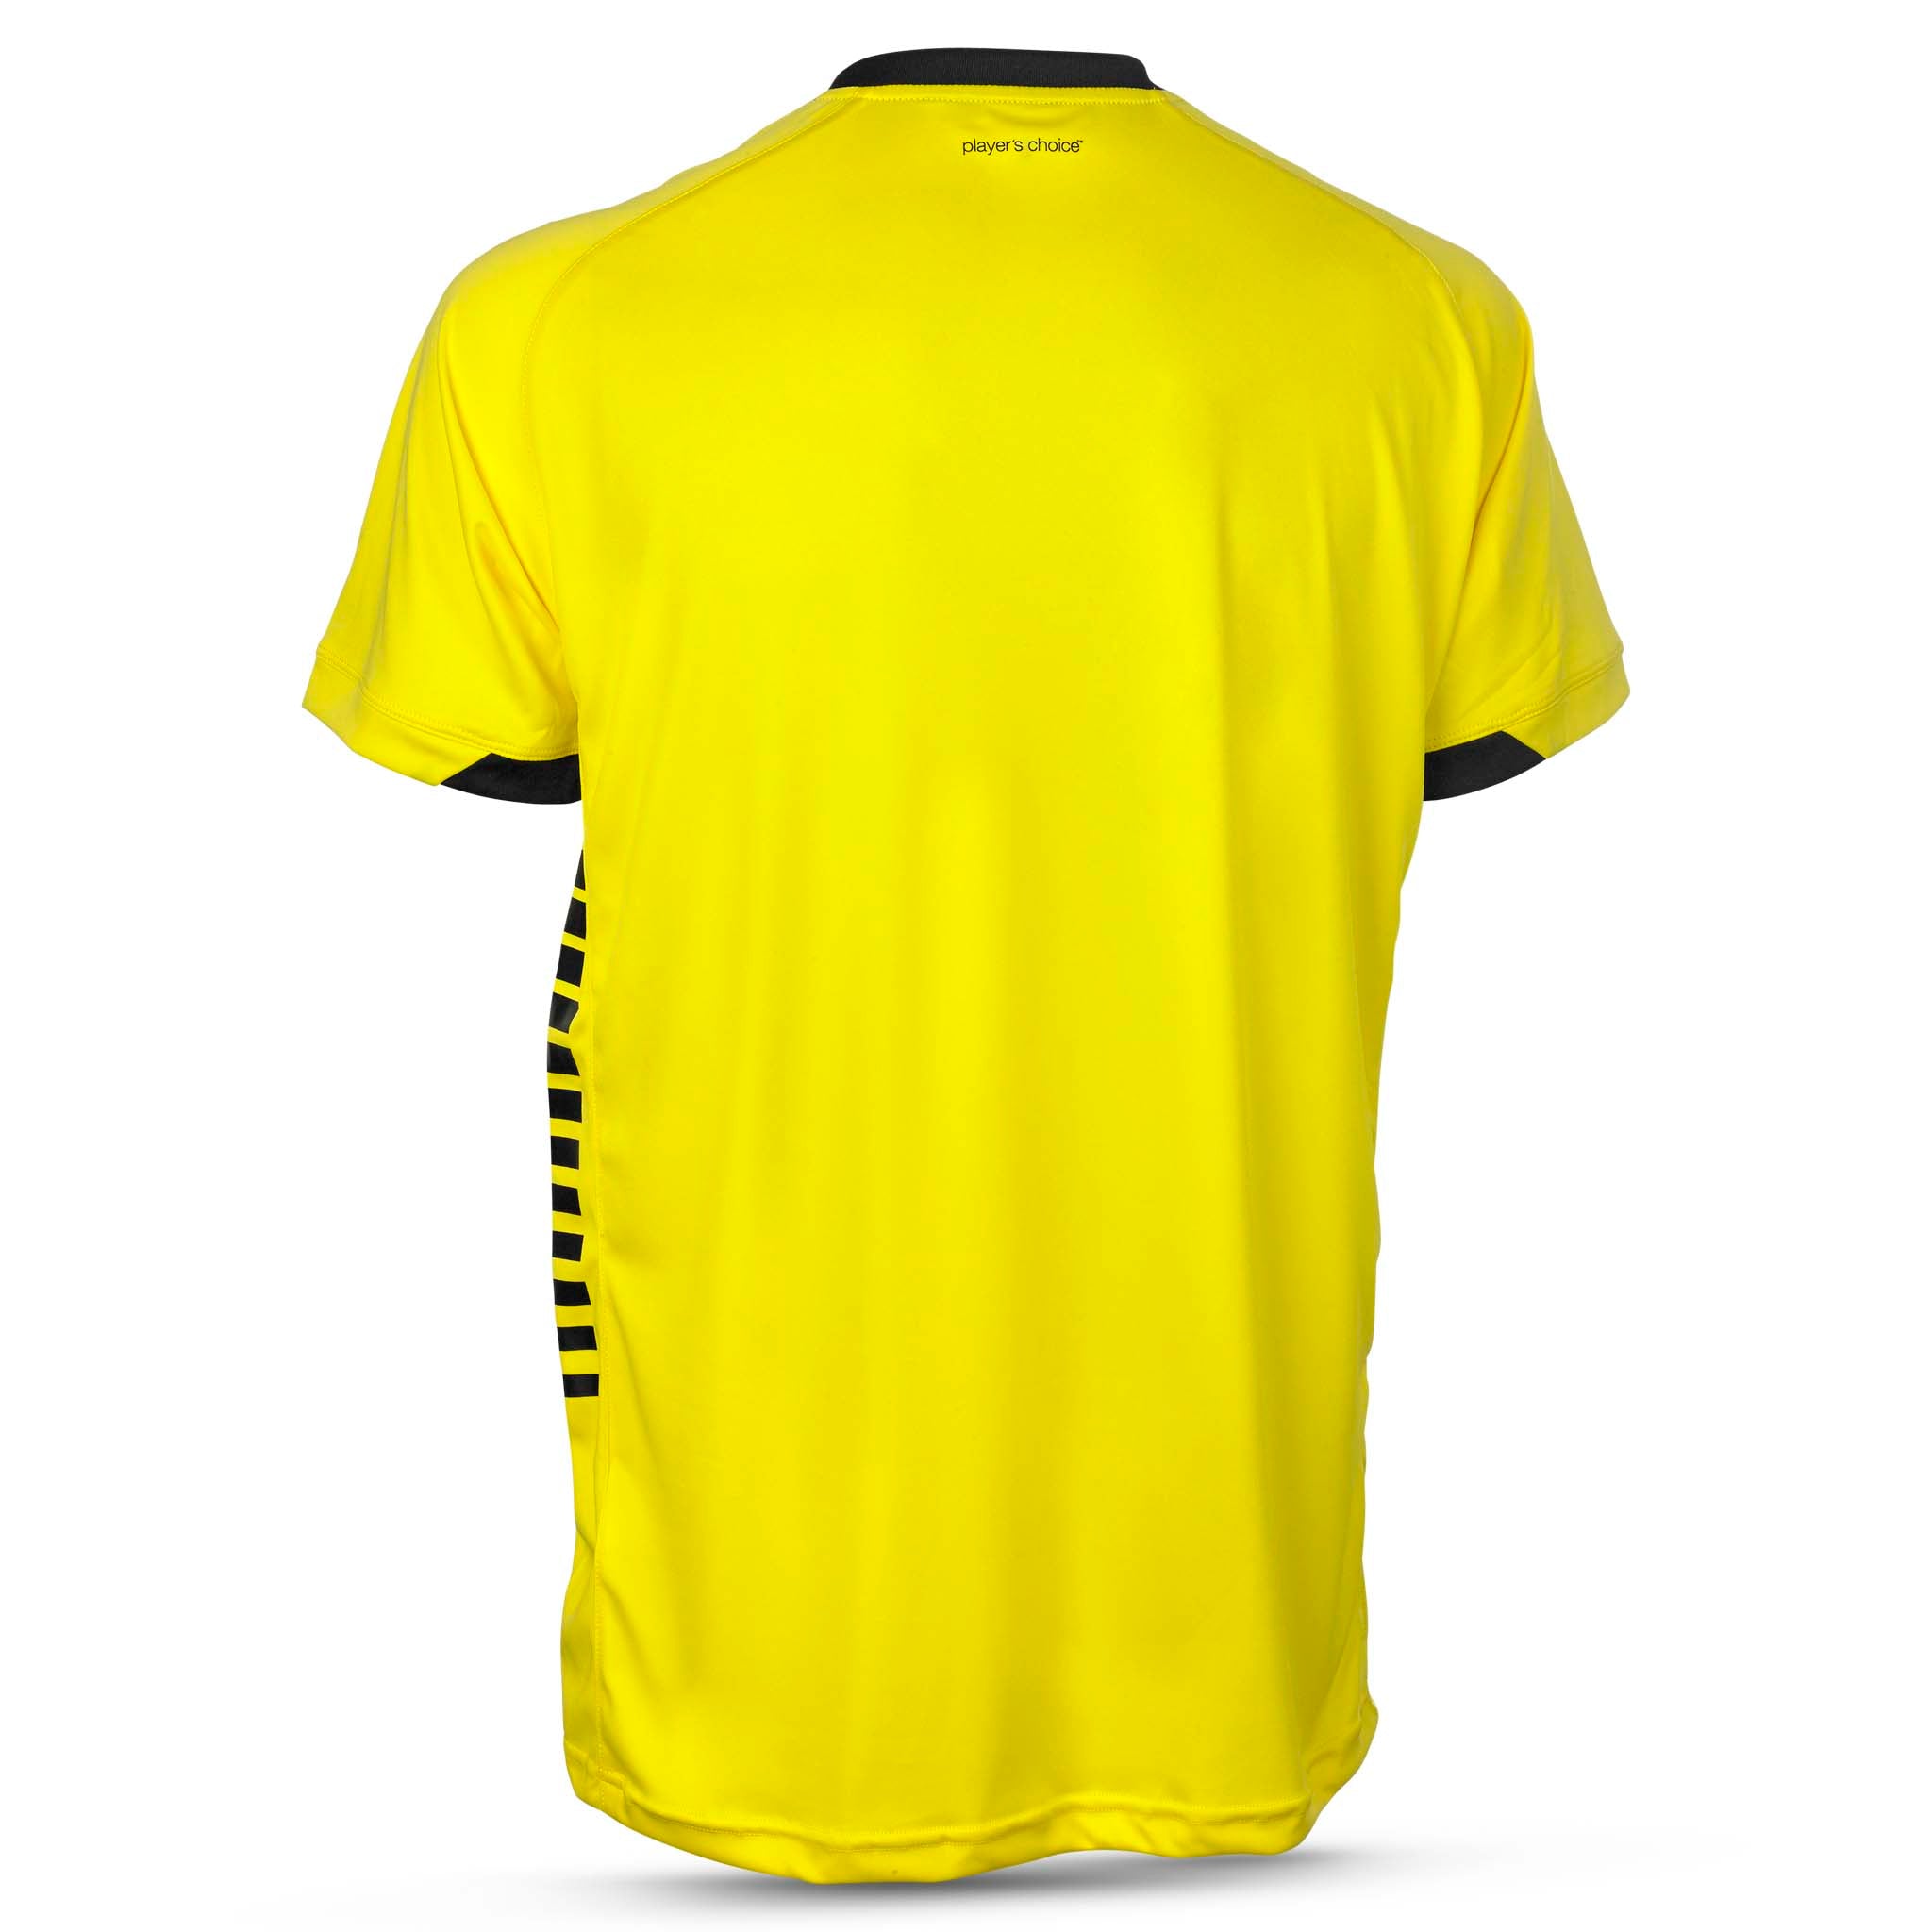 Spain Kortärmad spelartröja #färg_gul/svart